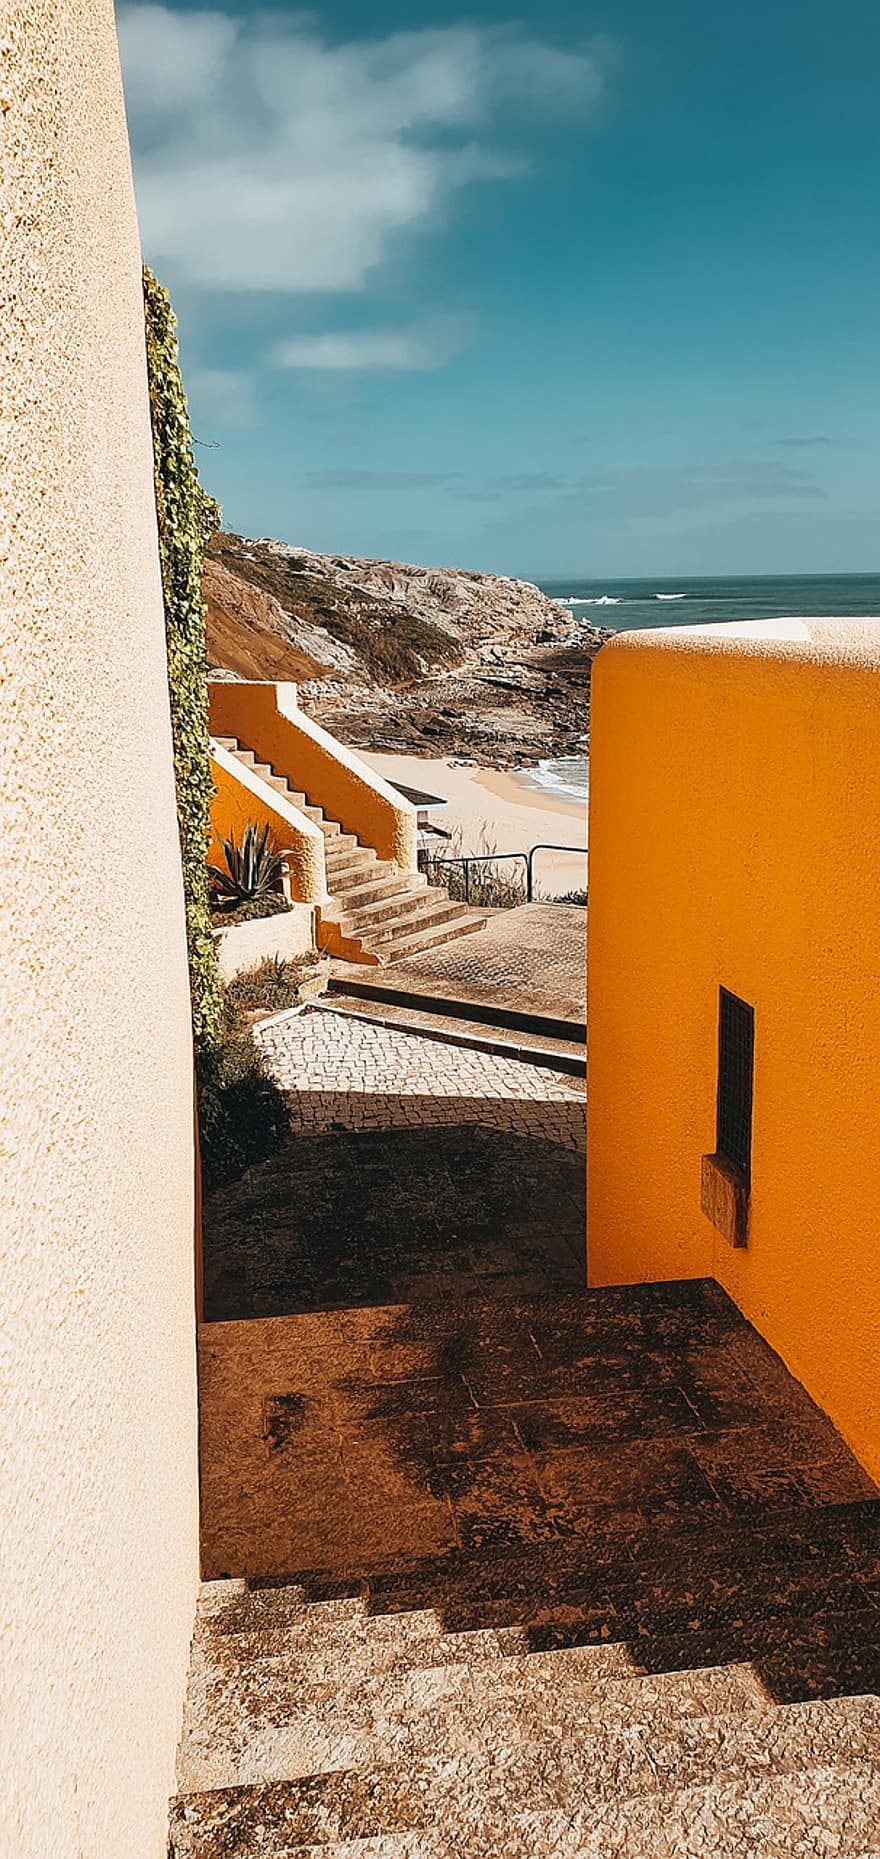 escalera, edificios, playa, arena, Oceano, viaje, turismo, naturaleza, Portugal, arquitectura